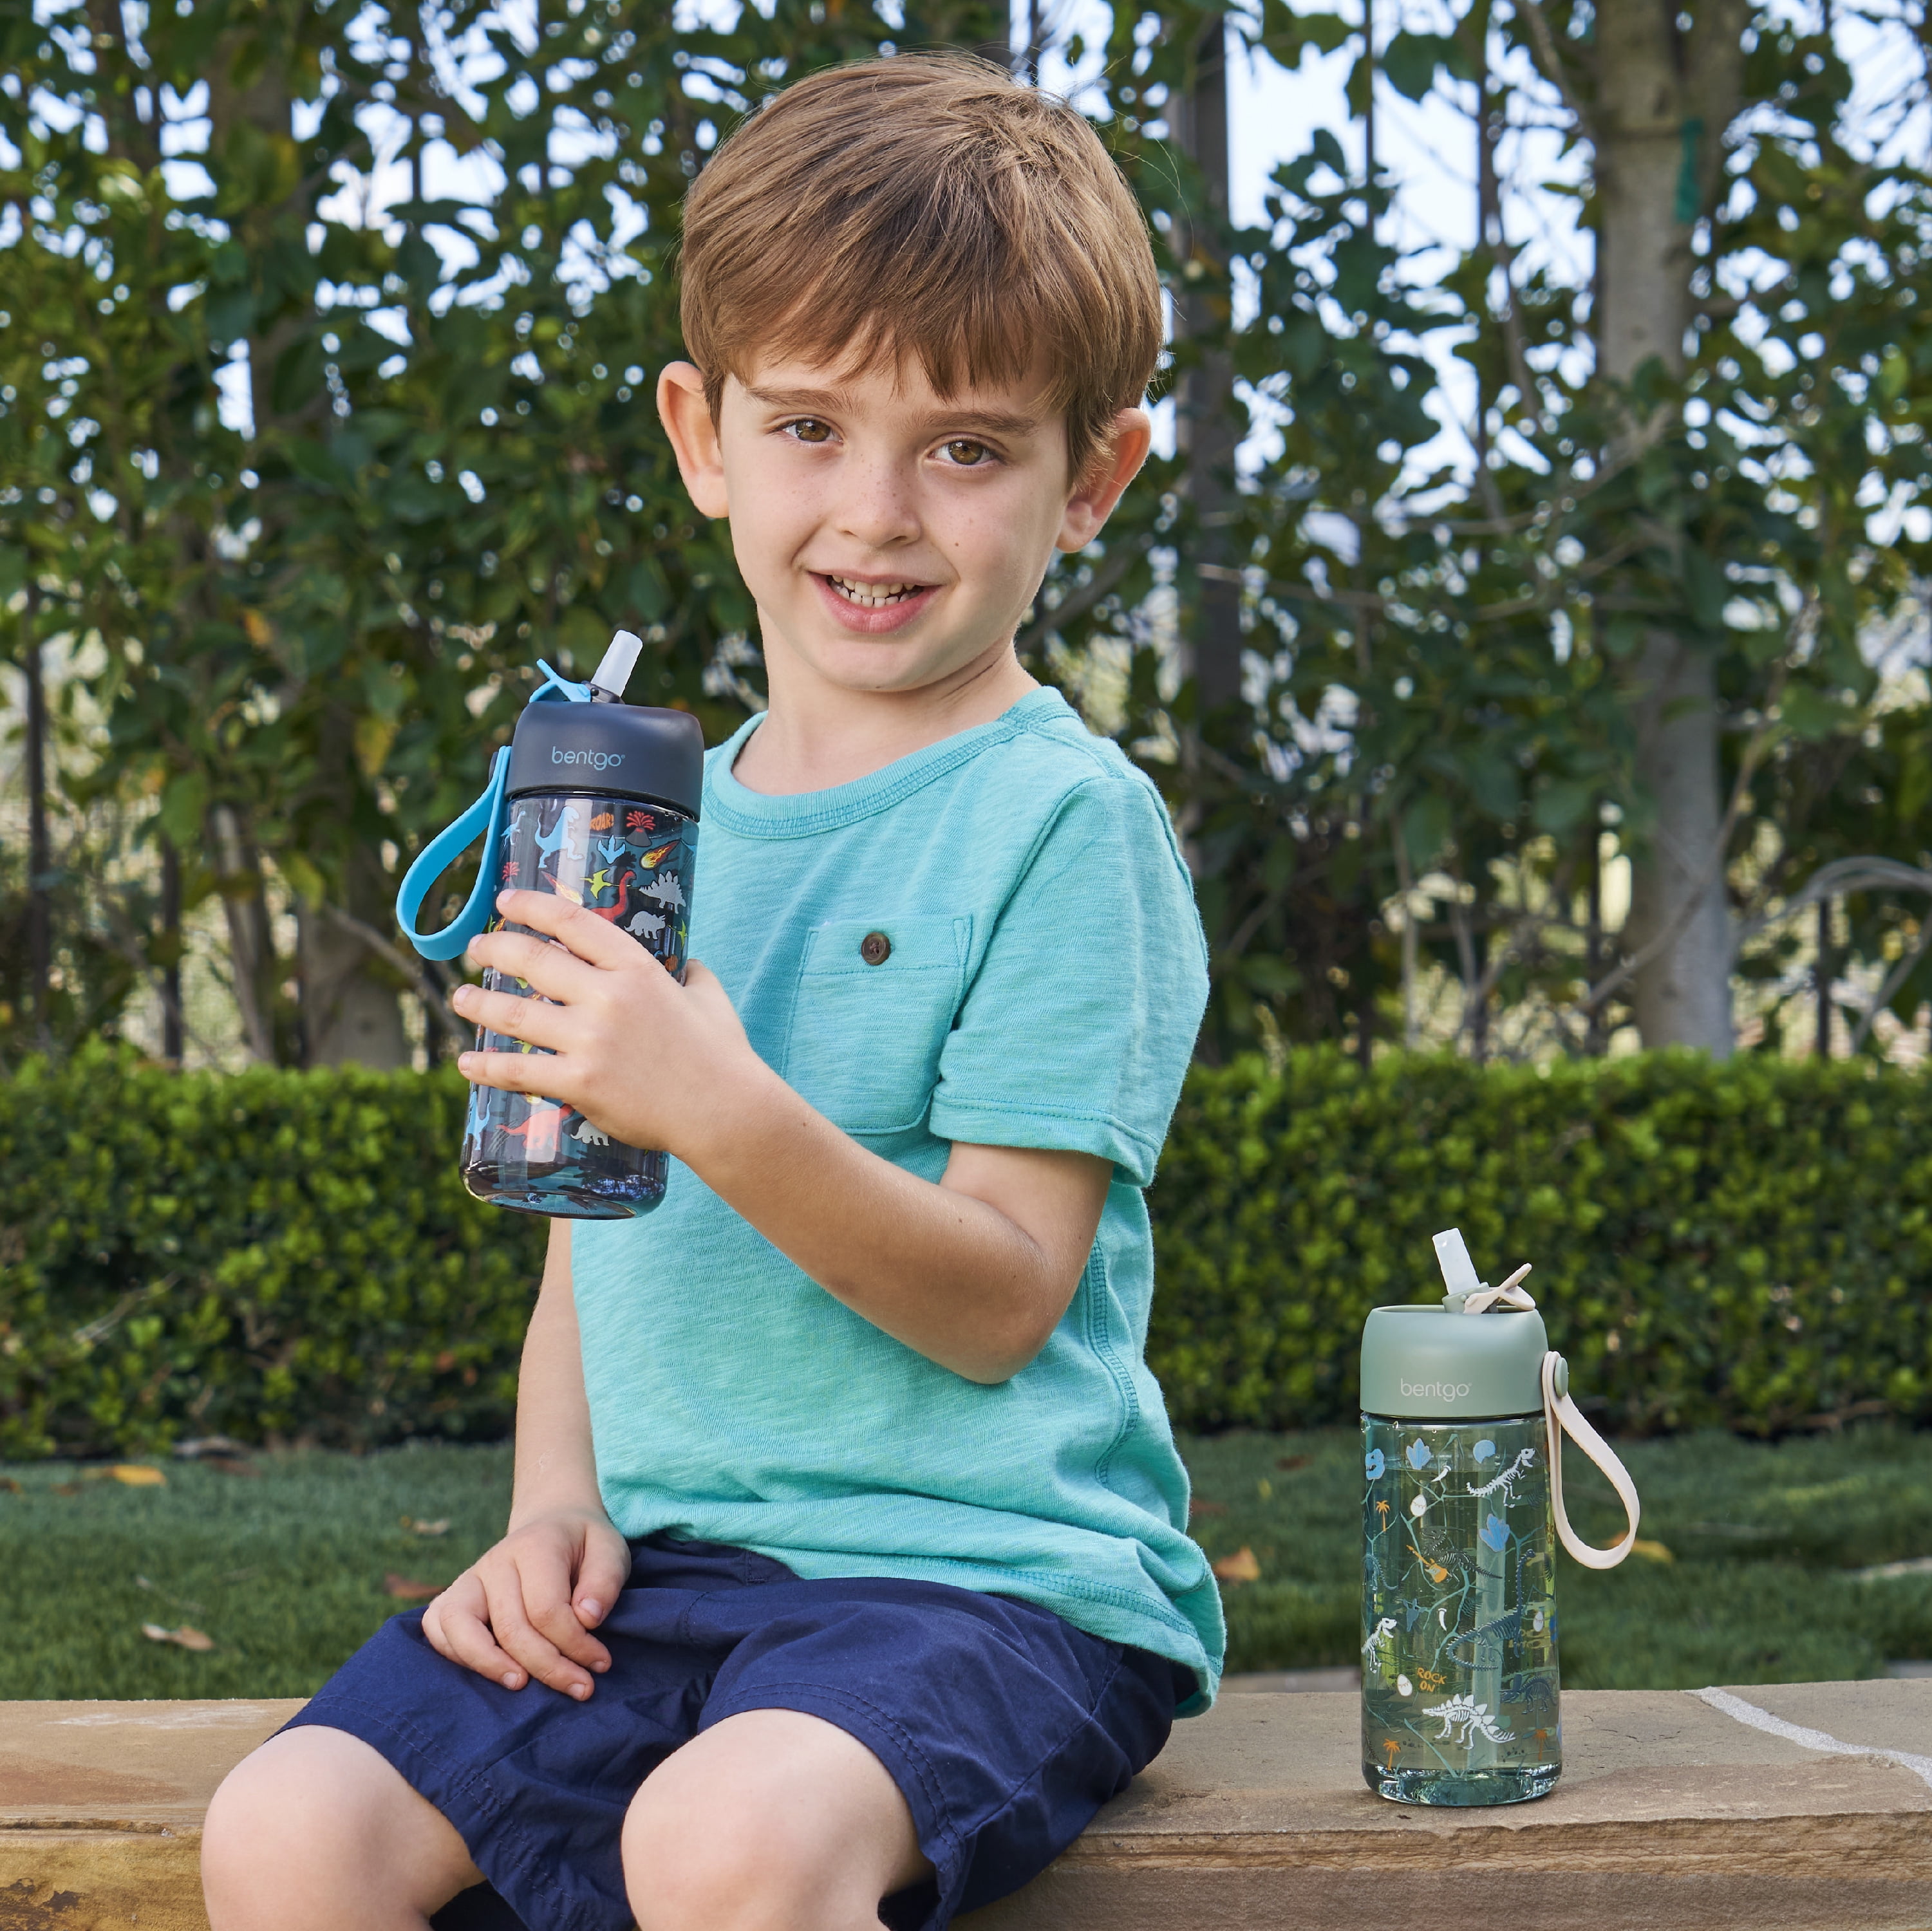 Bentgo® Kids School Water Bottles 15 oz – Prime Water Bottles